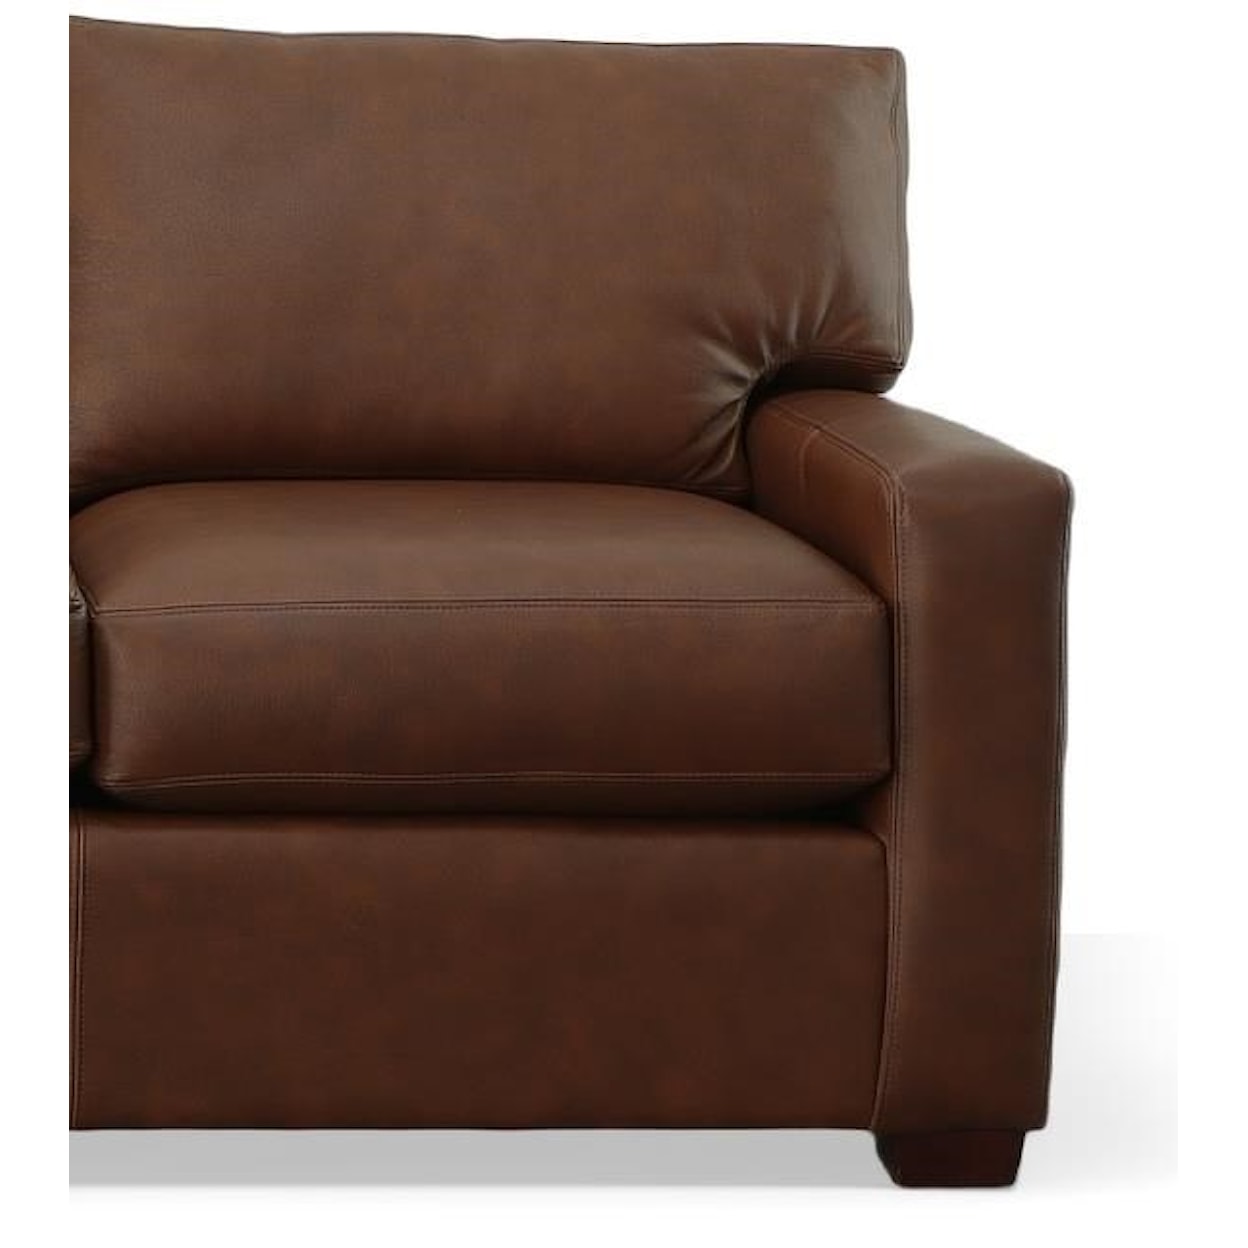 Leathercraft Manhattan 3 Seat Sofa